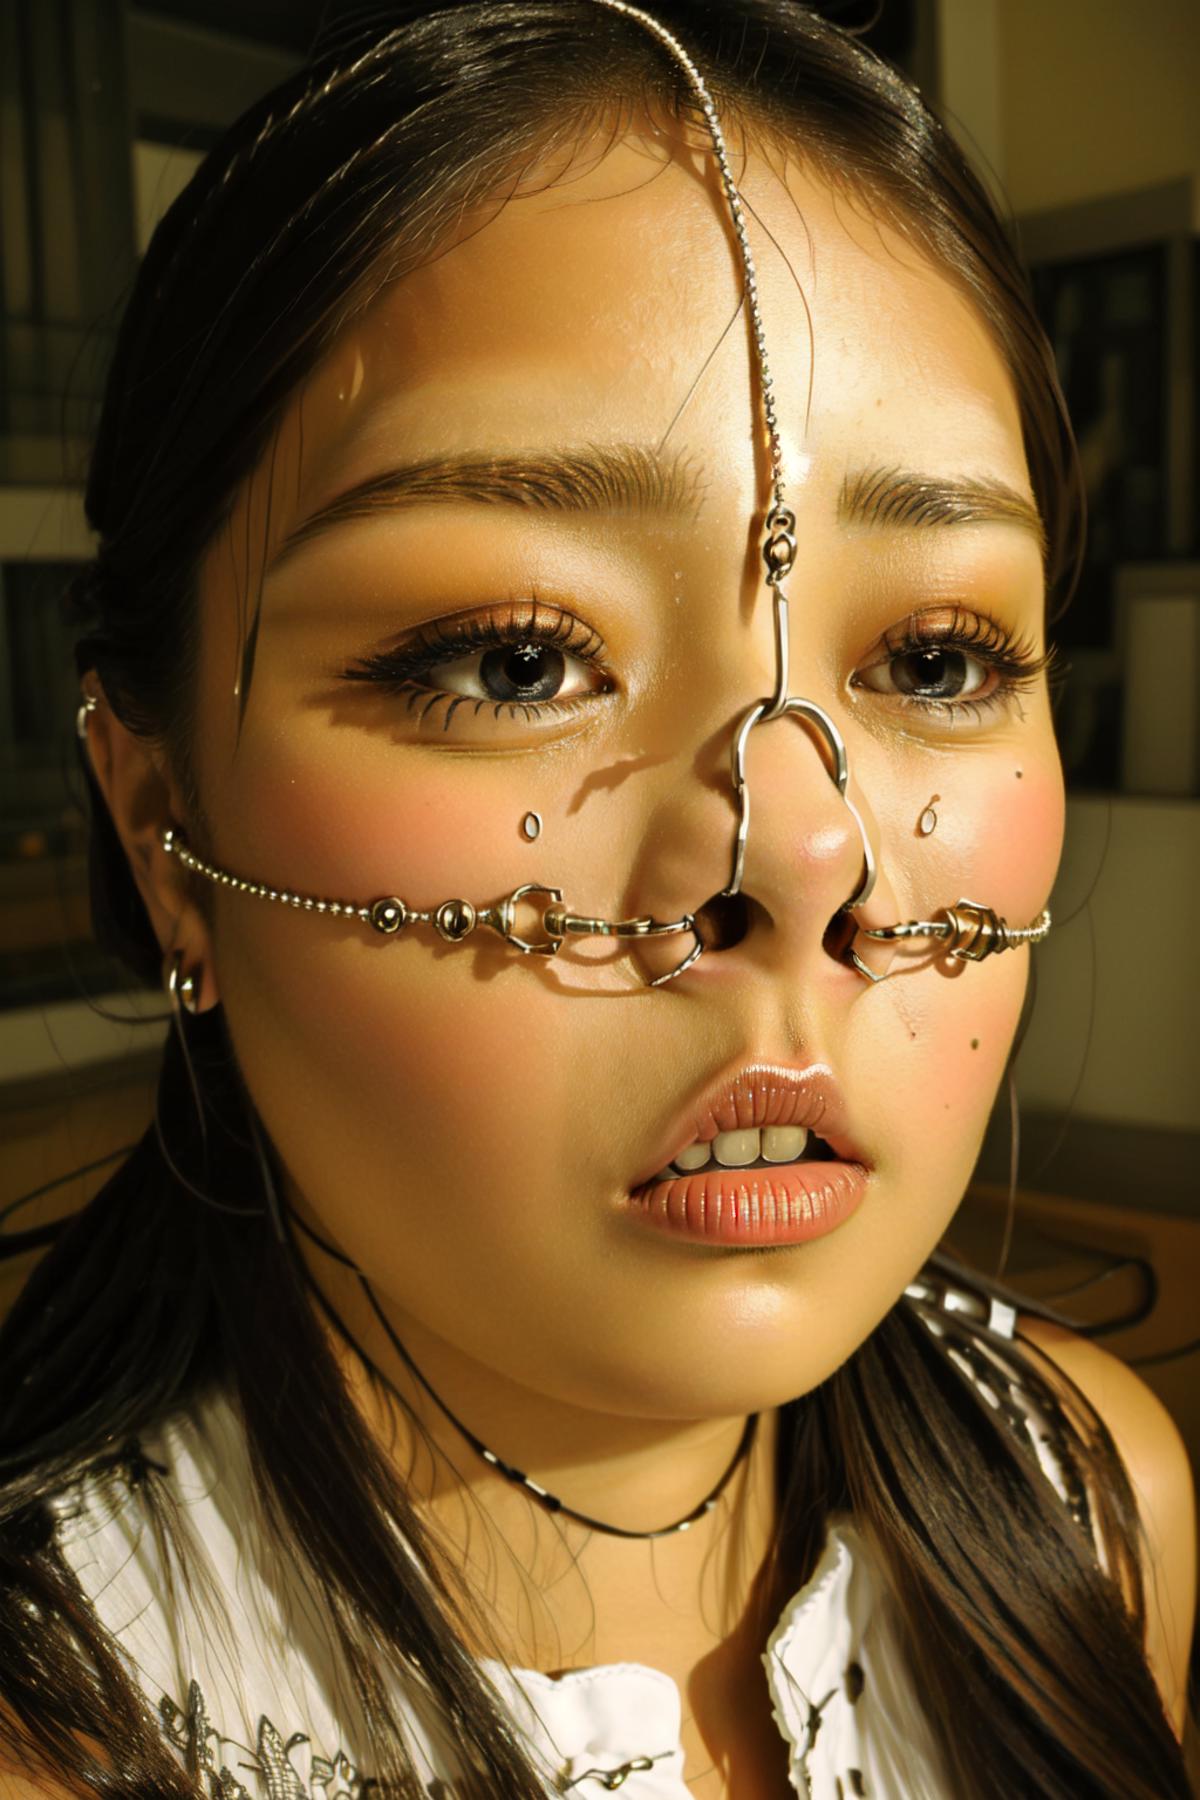 Realistic Nose Hook image by PettankoPaizuri